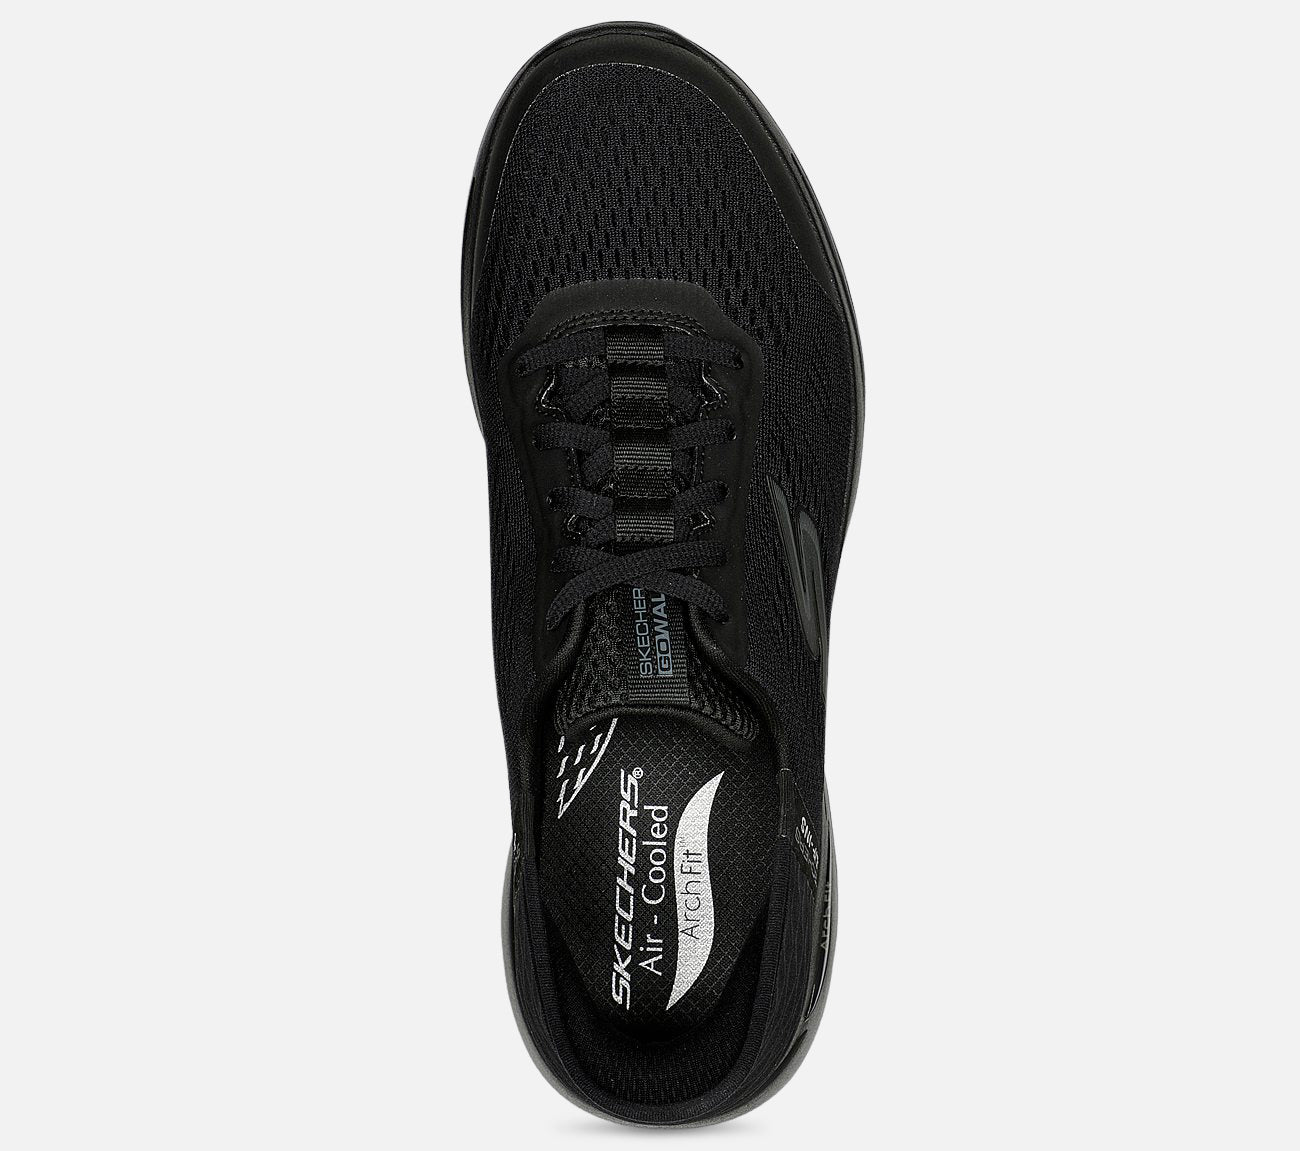 Slip-ins: GO WALK Arch Fit - Simplicity Shoe Skechers